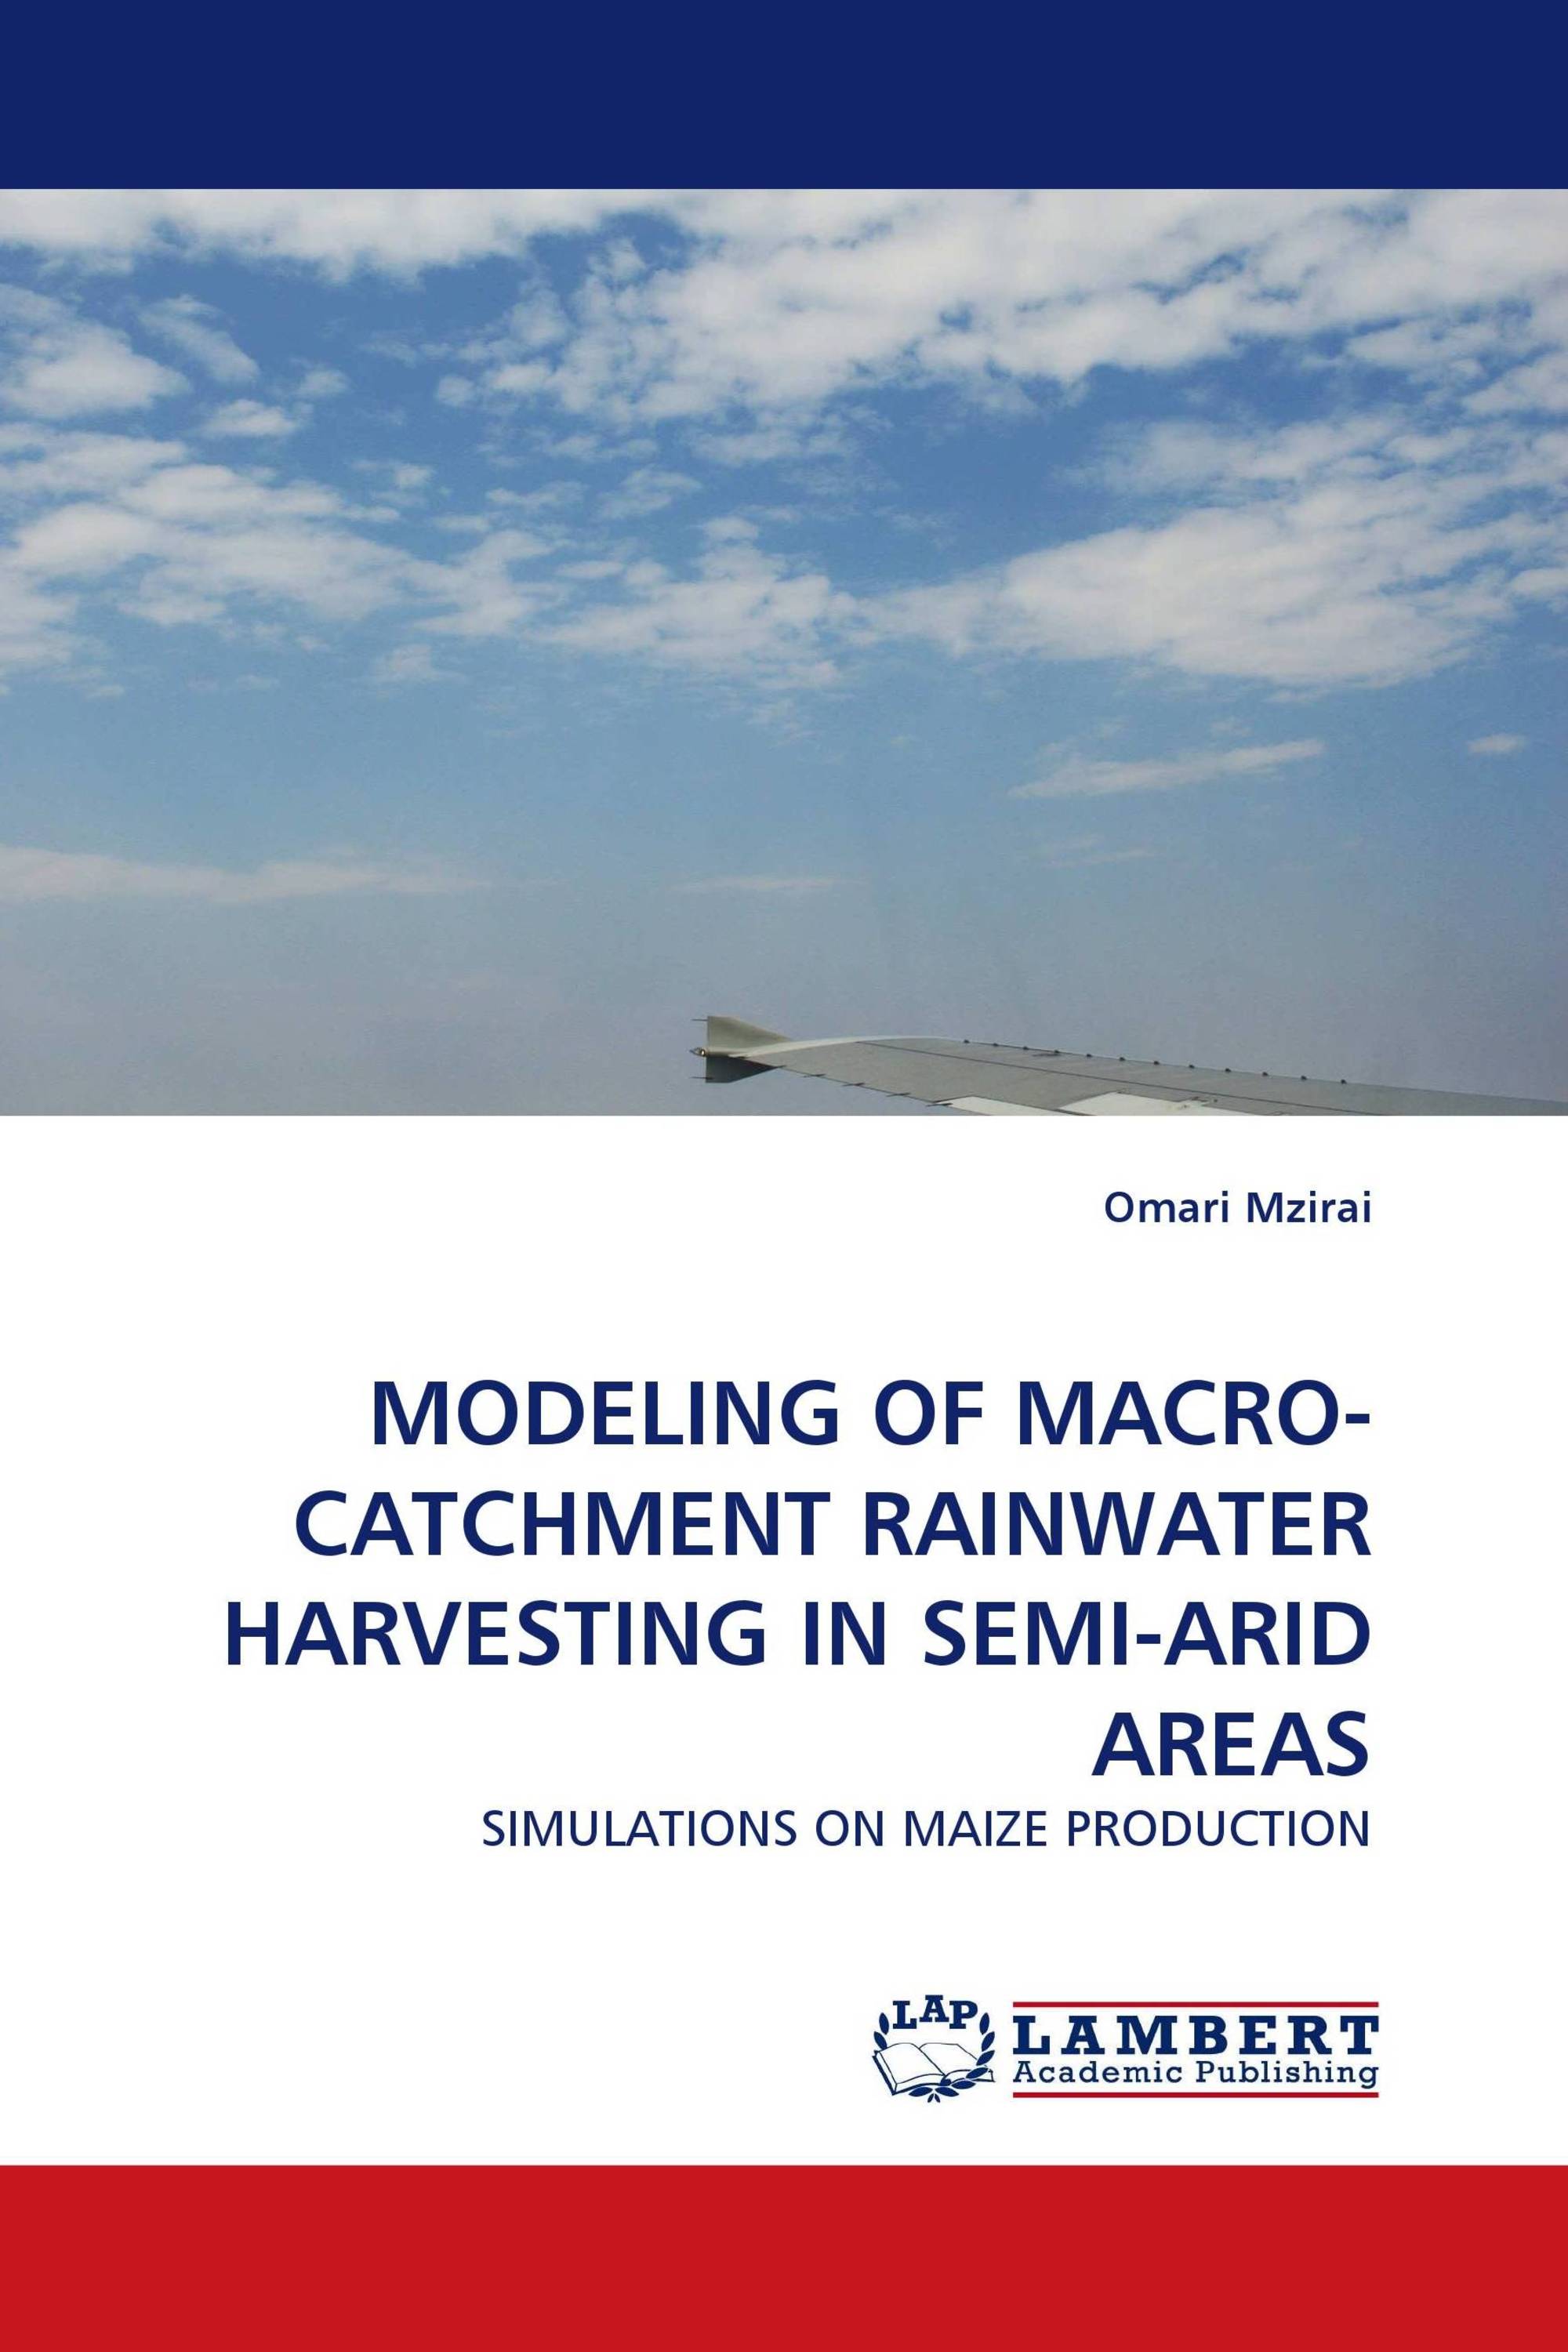 MODELING OF MACRO-CATCHMENT RAINWATER HARVESTING IN SEMI-ARID AREAS